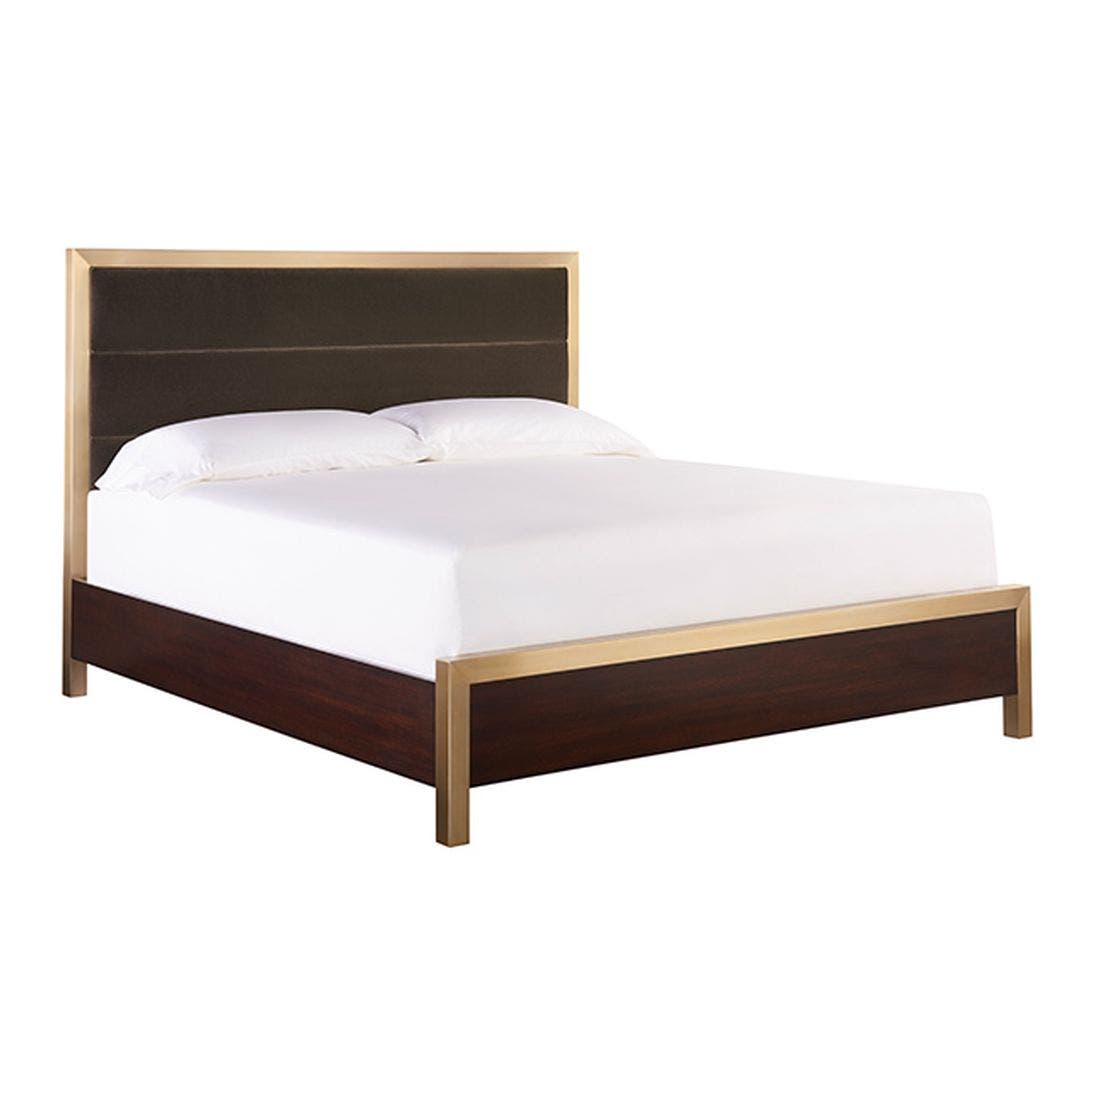 19170519-modern-mahogany-furniture-bedroom-furniture-beds-01